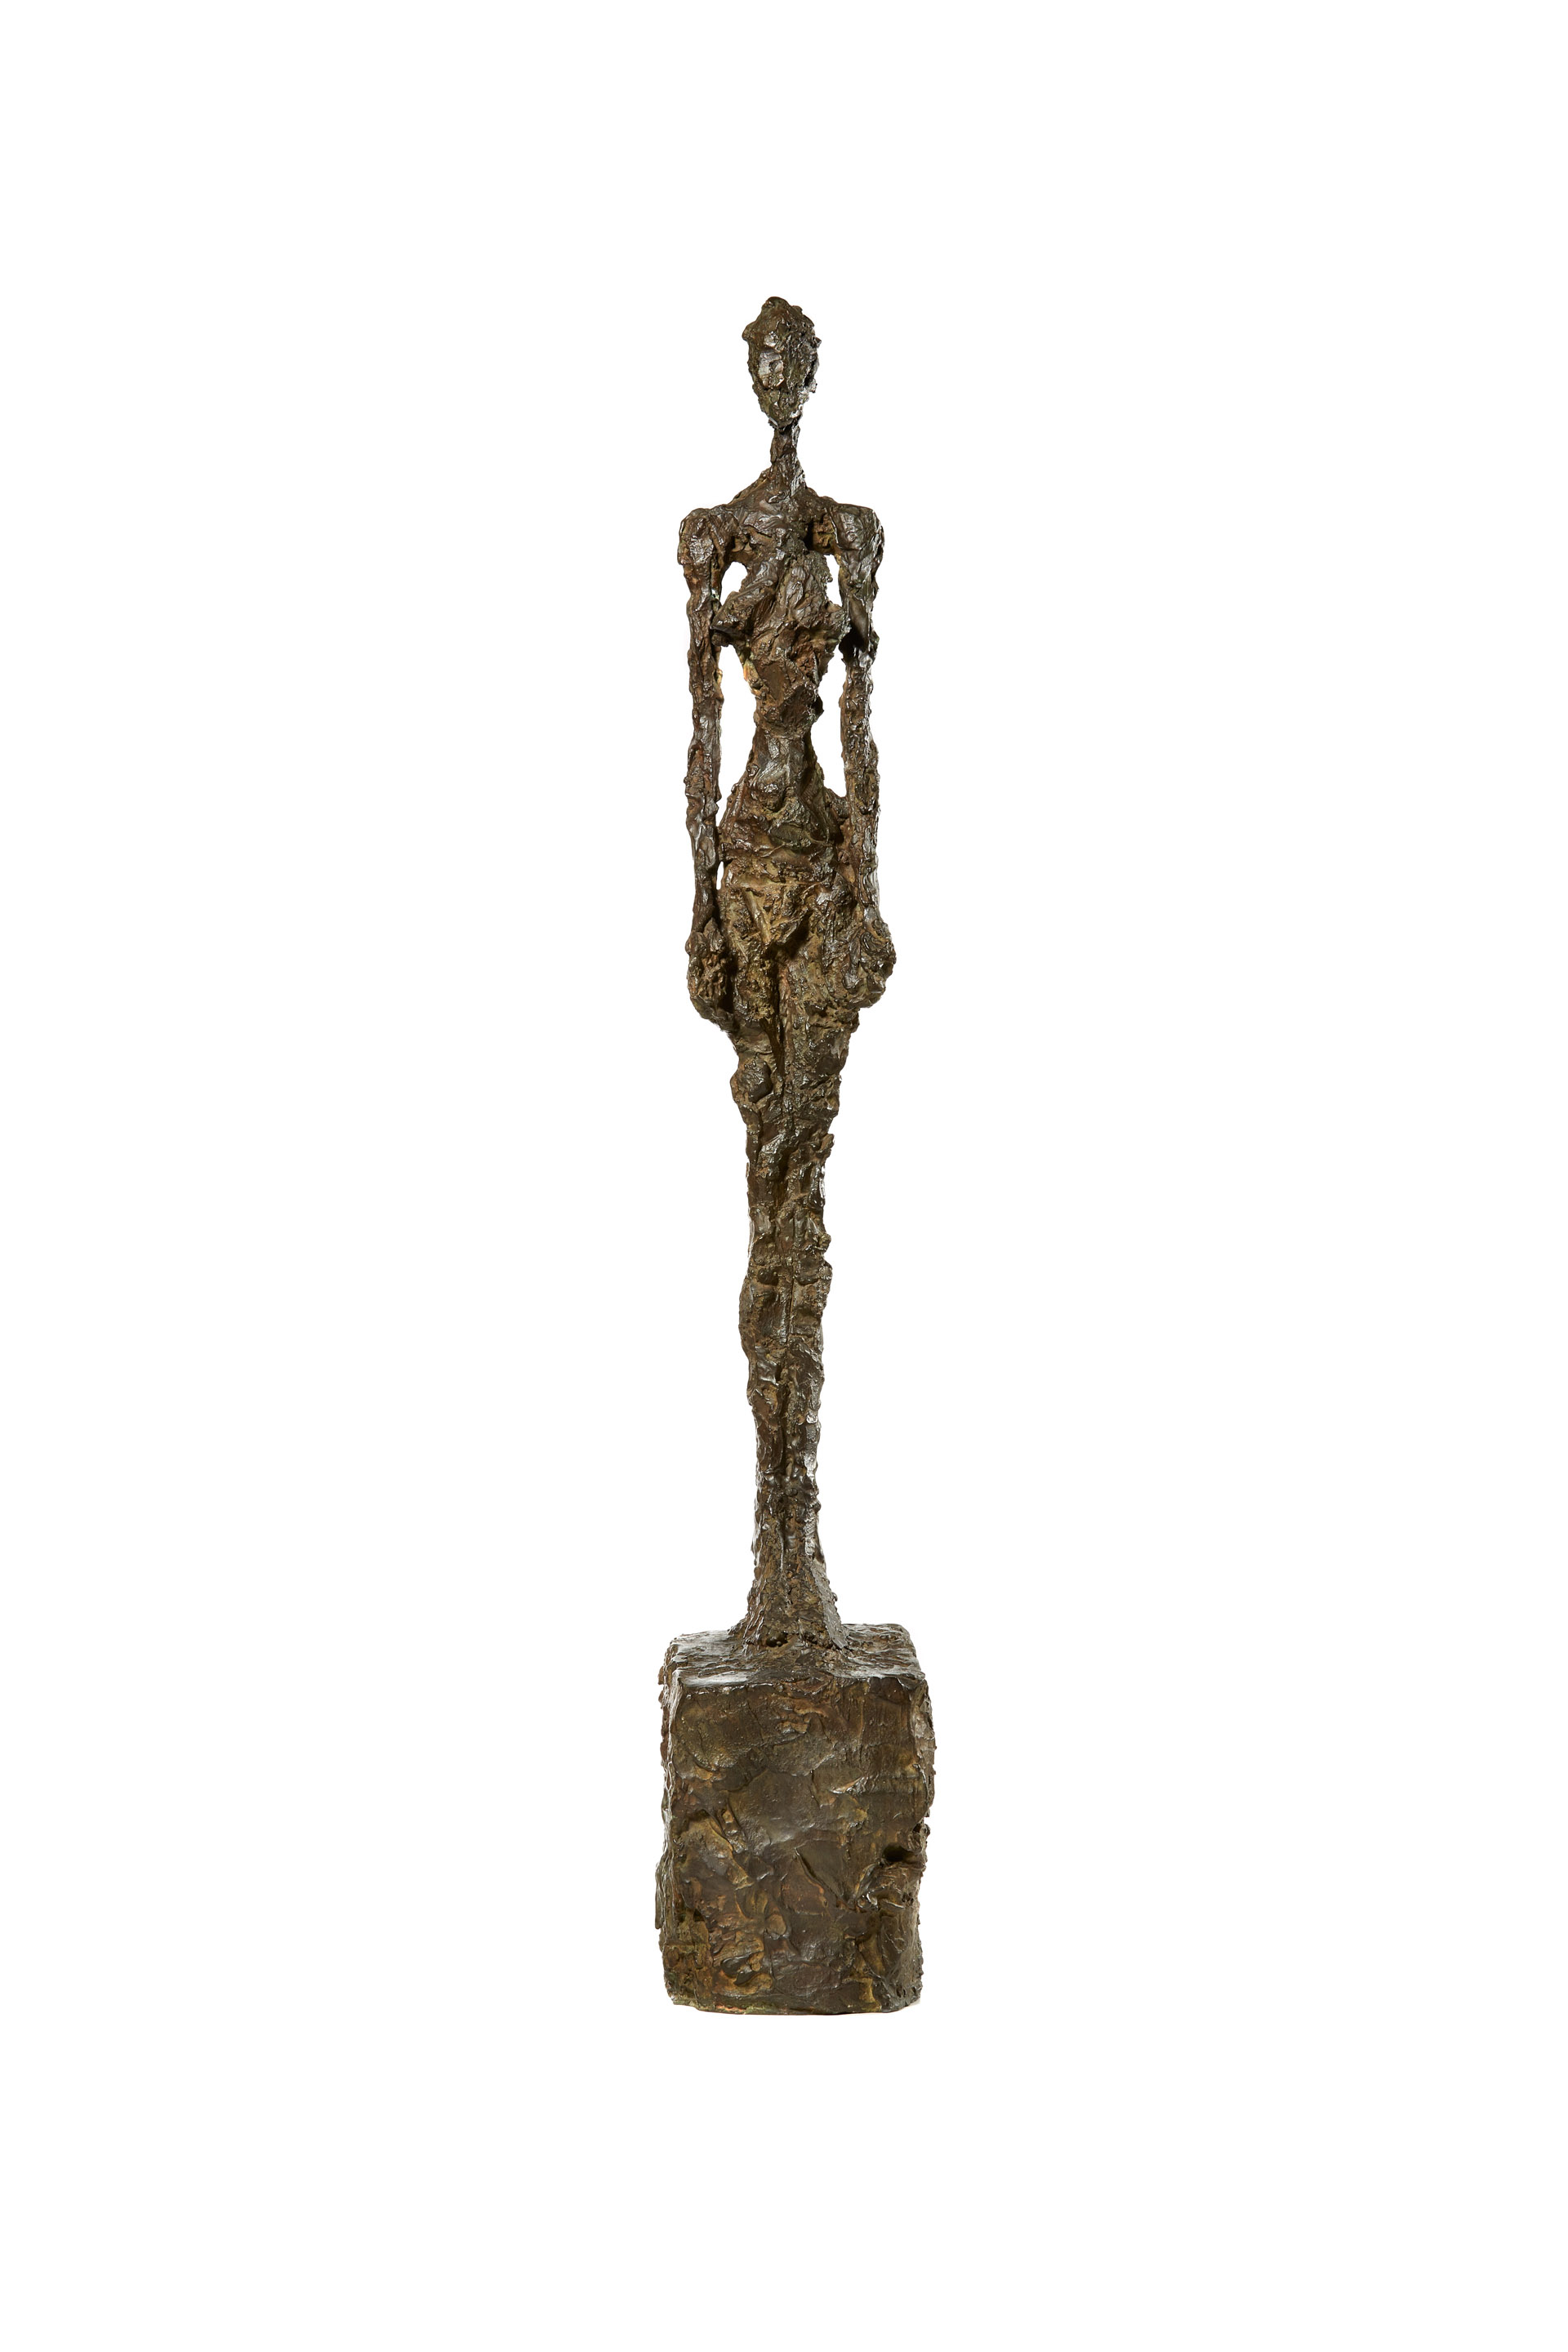 Alberto Giacometti: Standing Woman (1959)